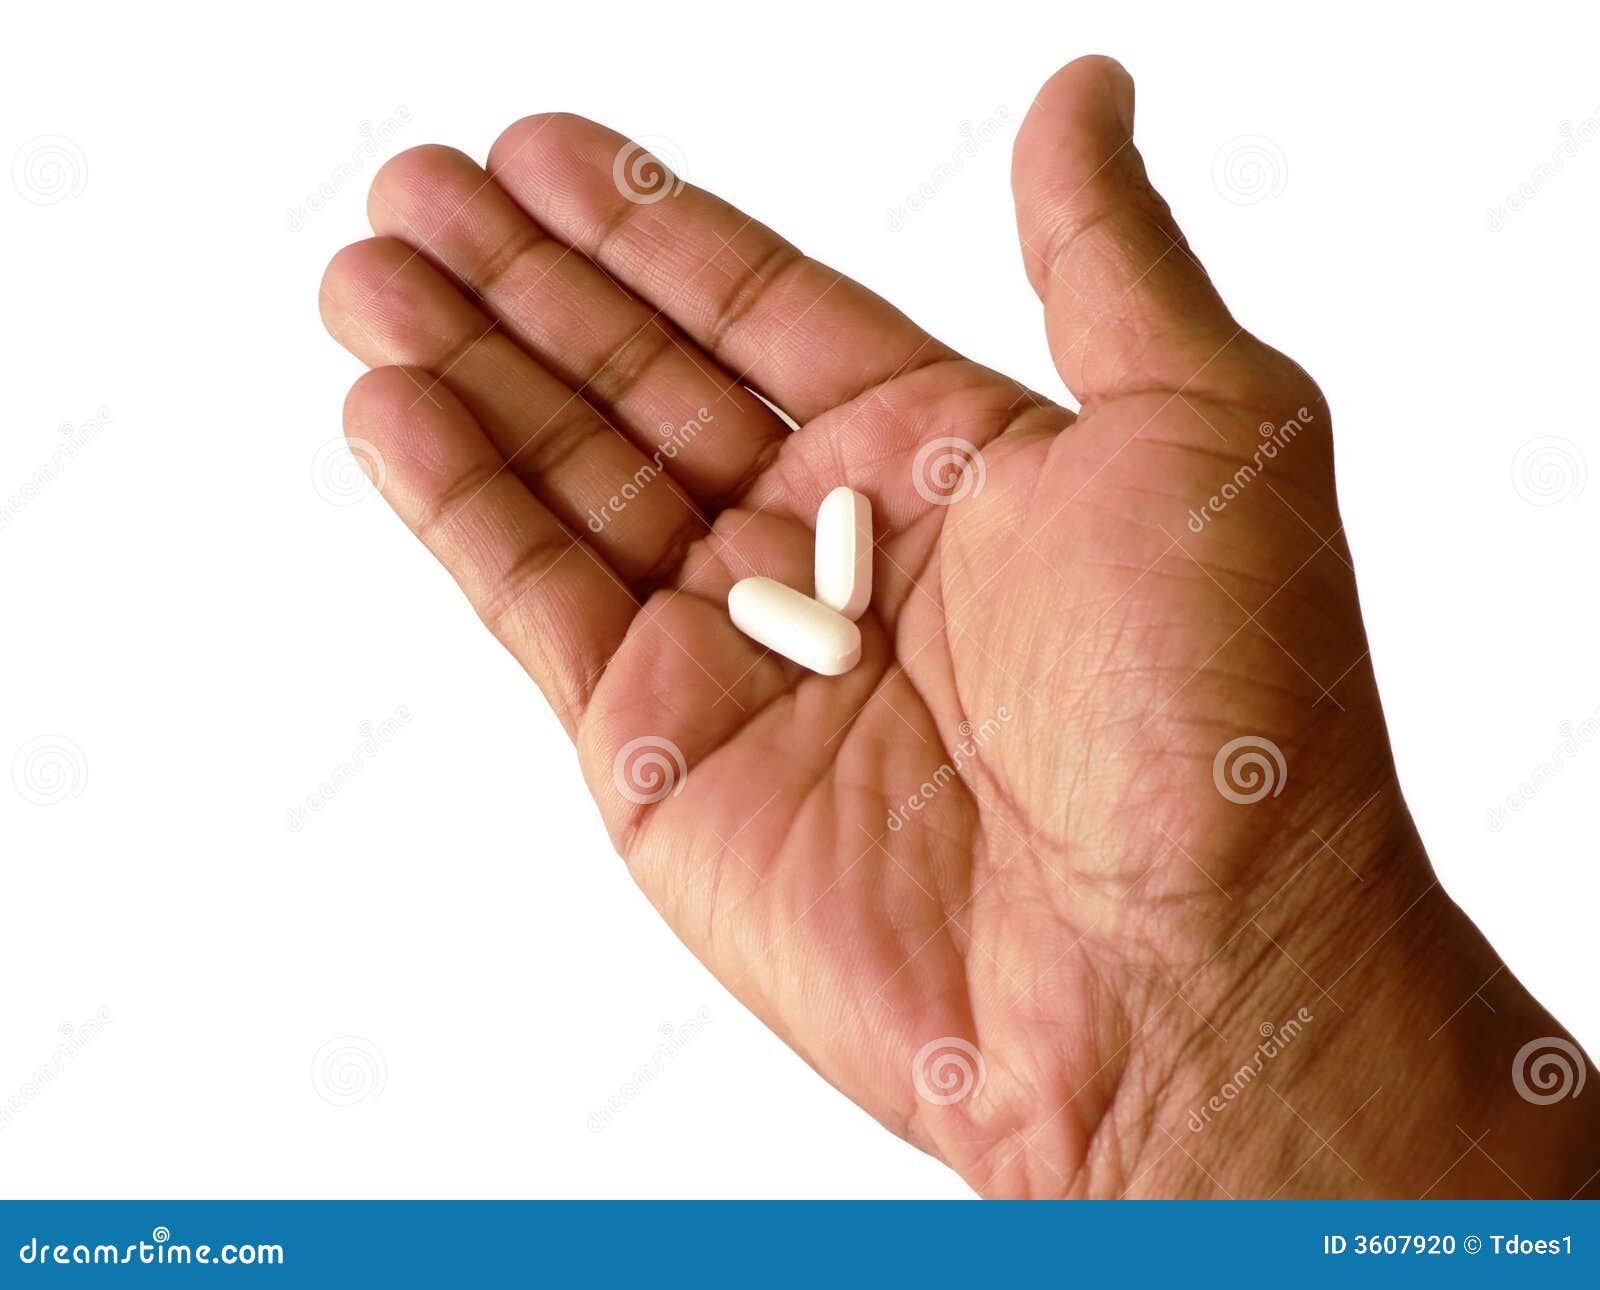 aspirin in open hand